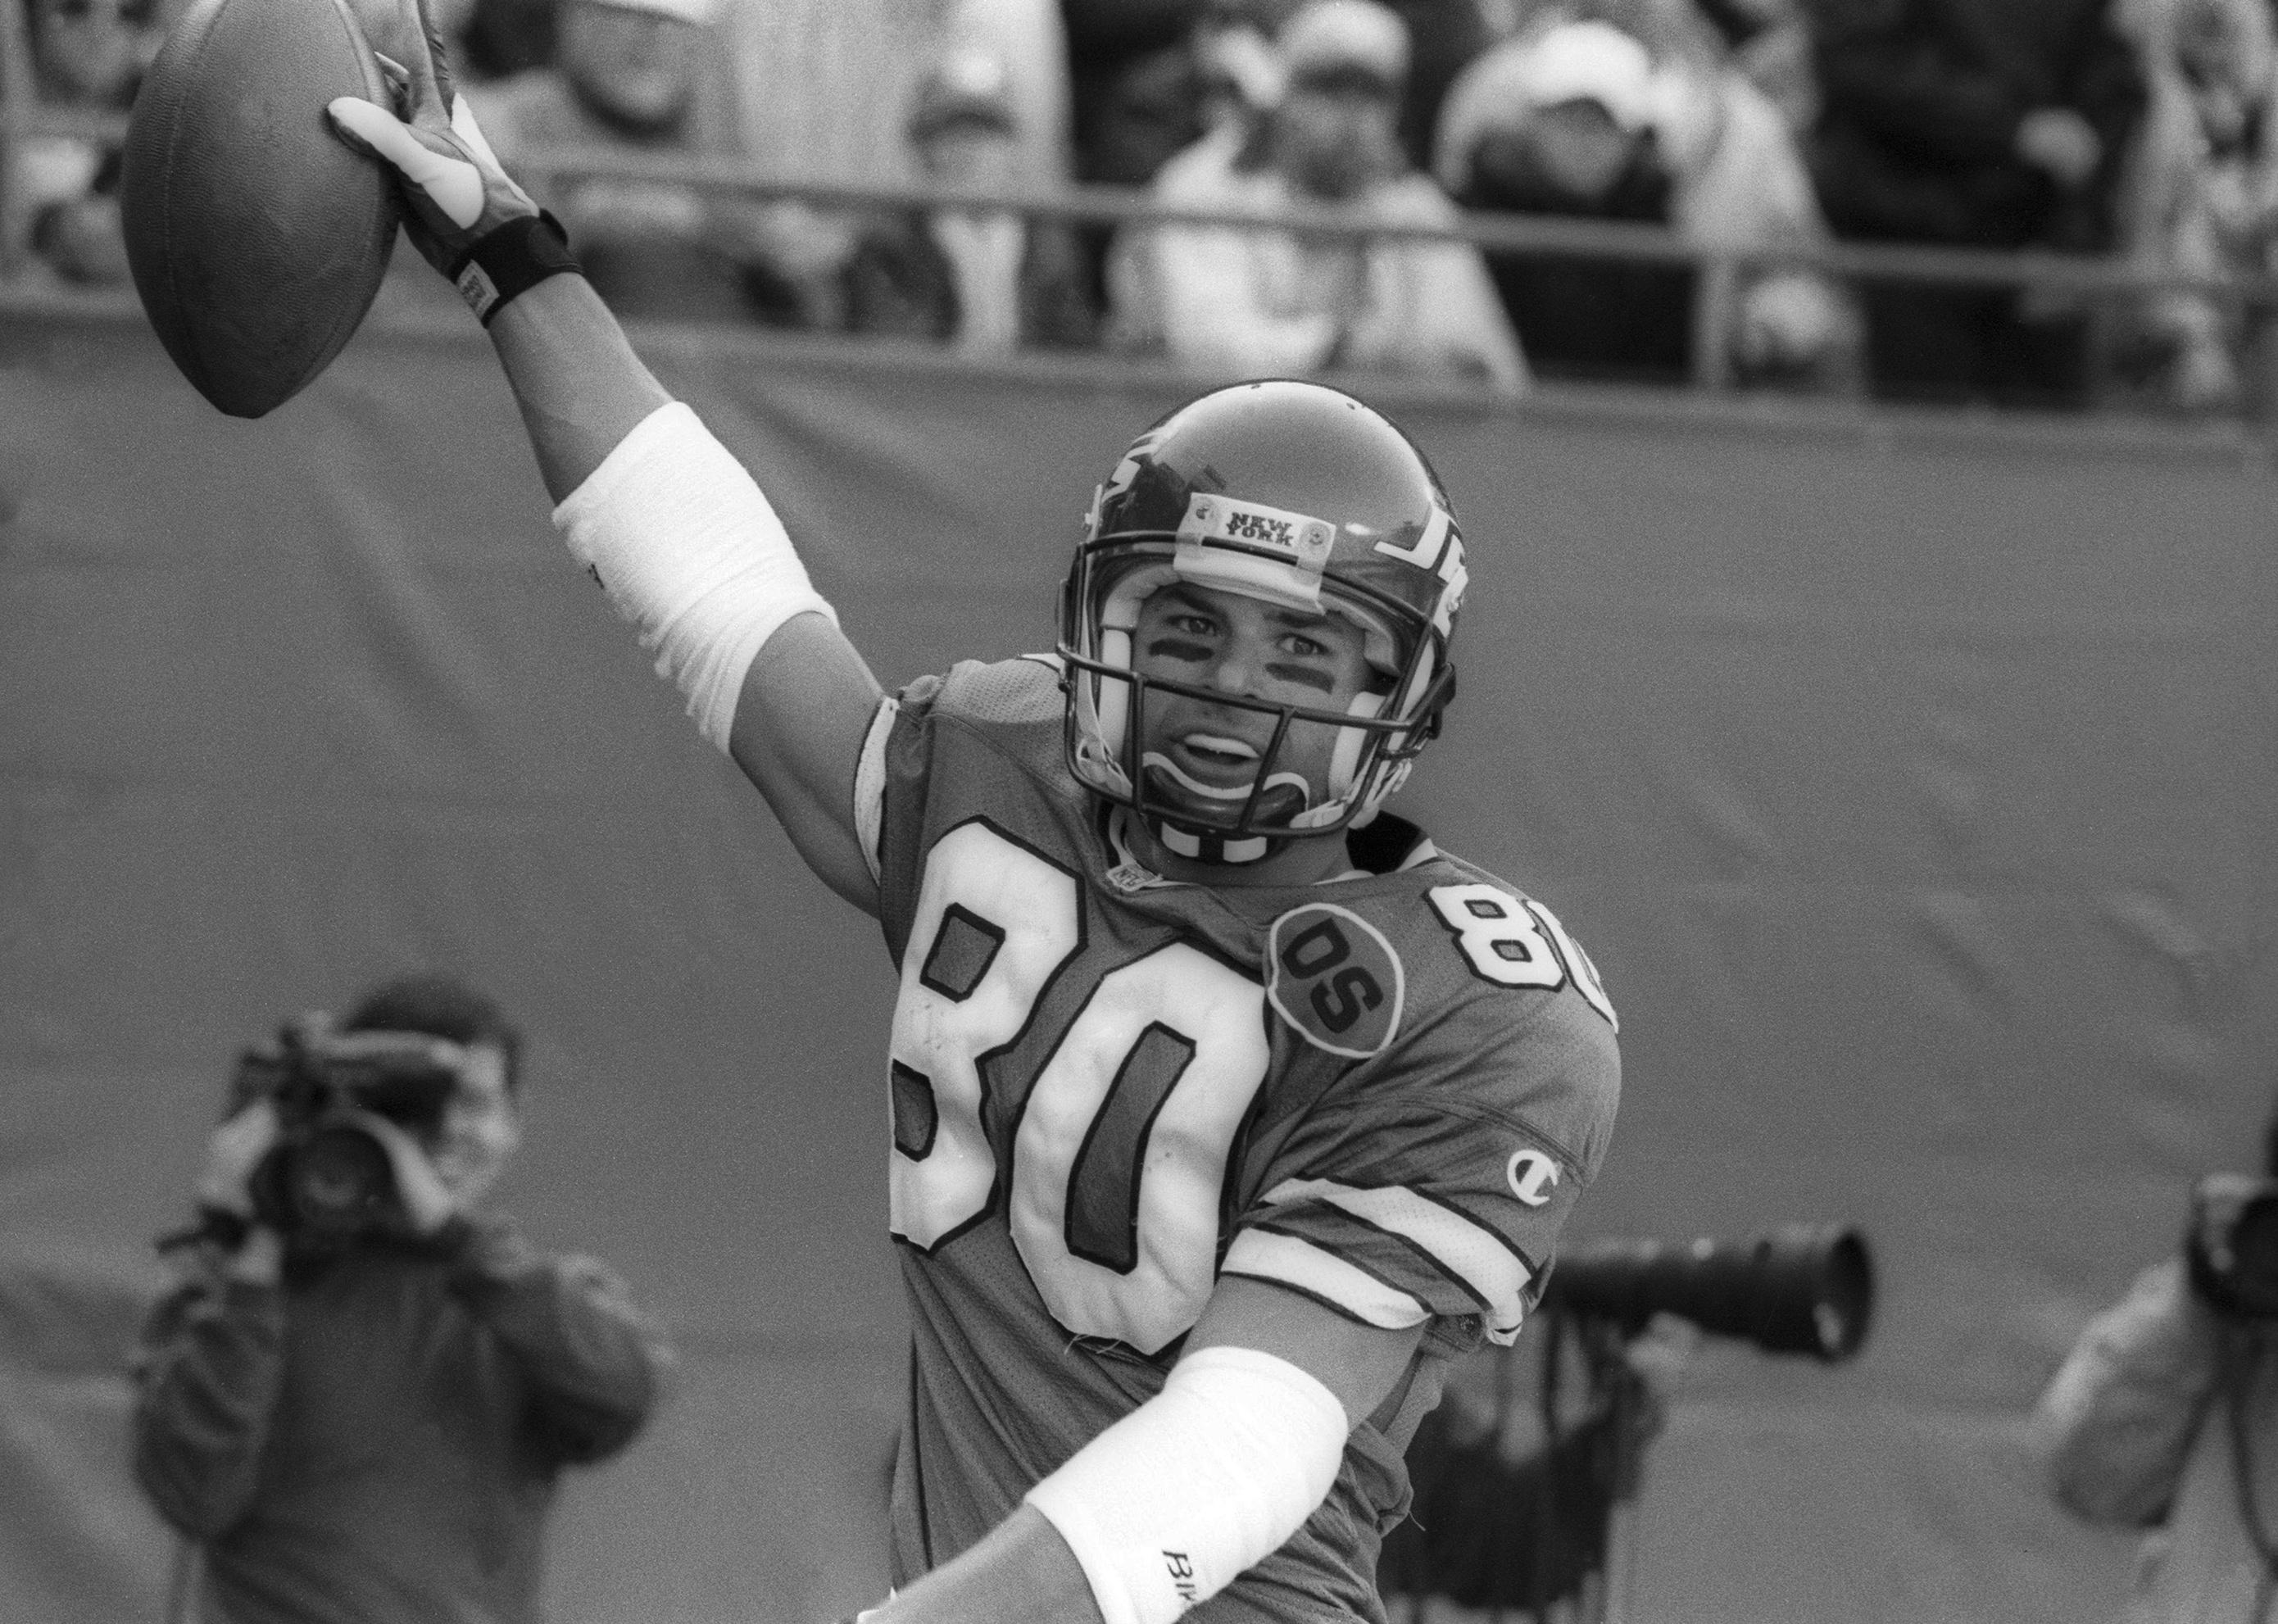 Wide receiver Wayne Chrebet of the New York Jets celebrates a touchdown.